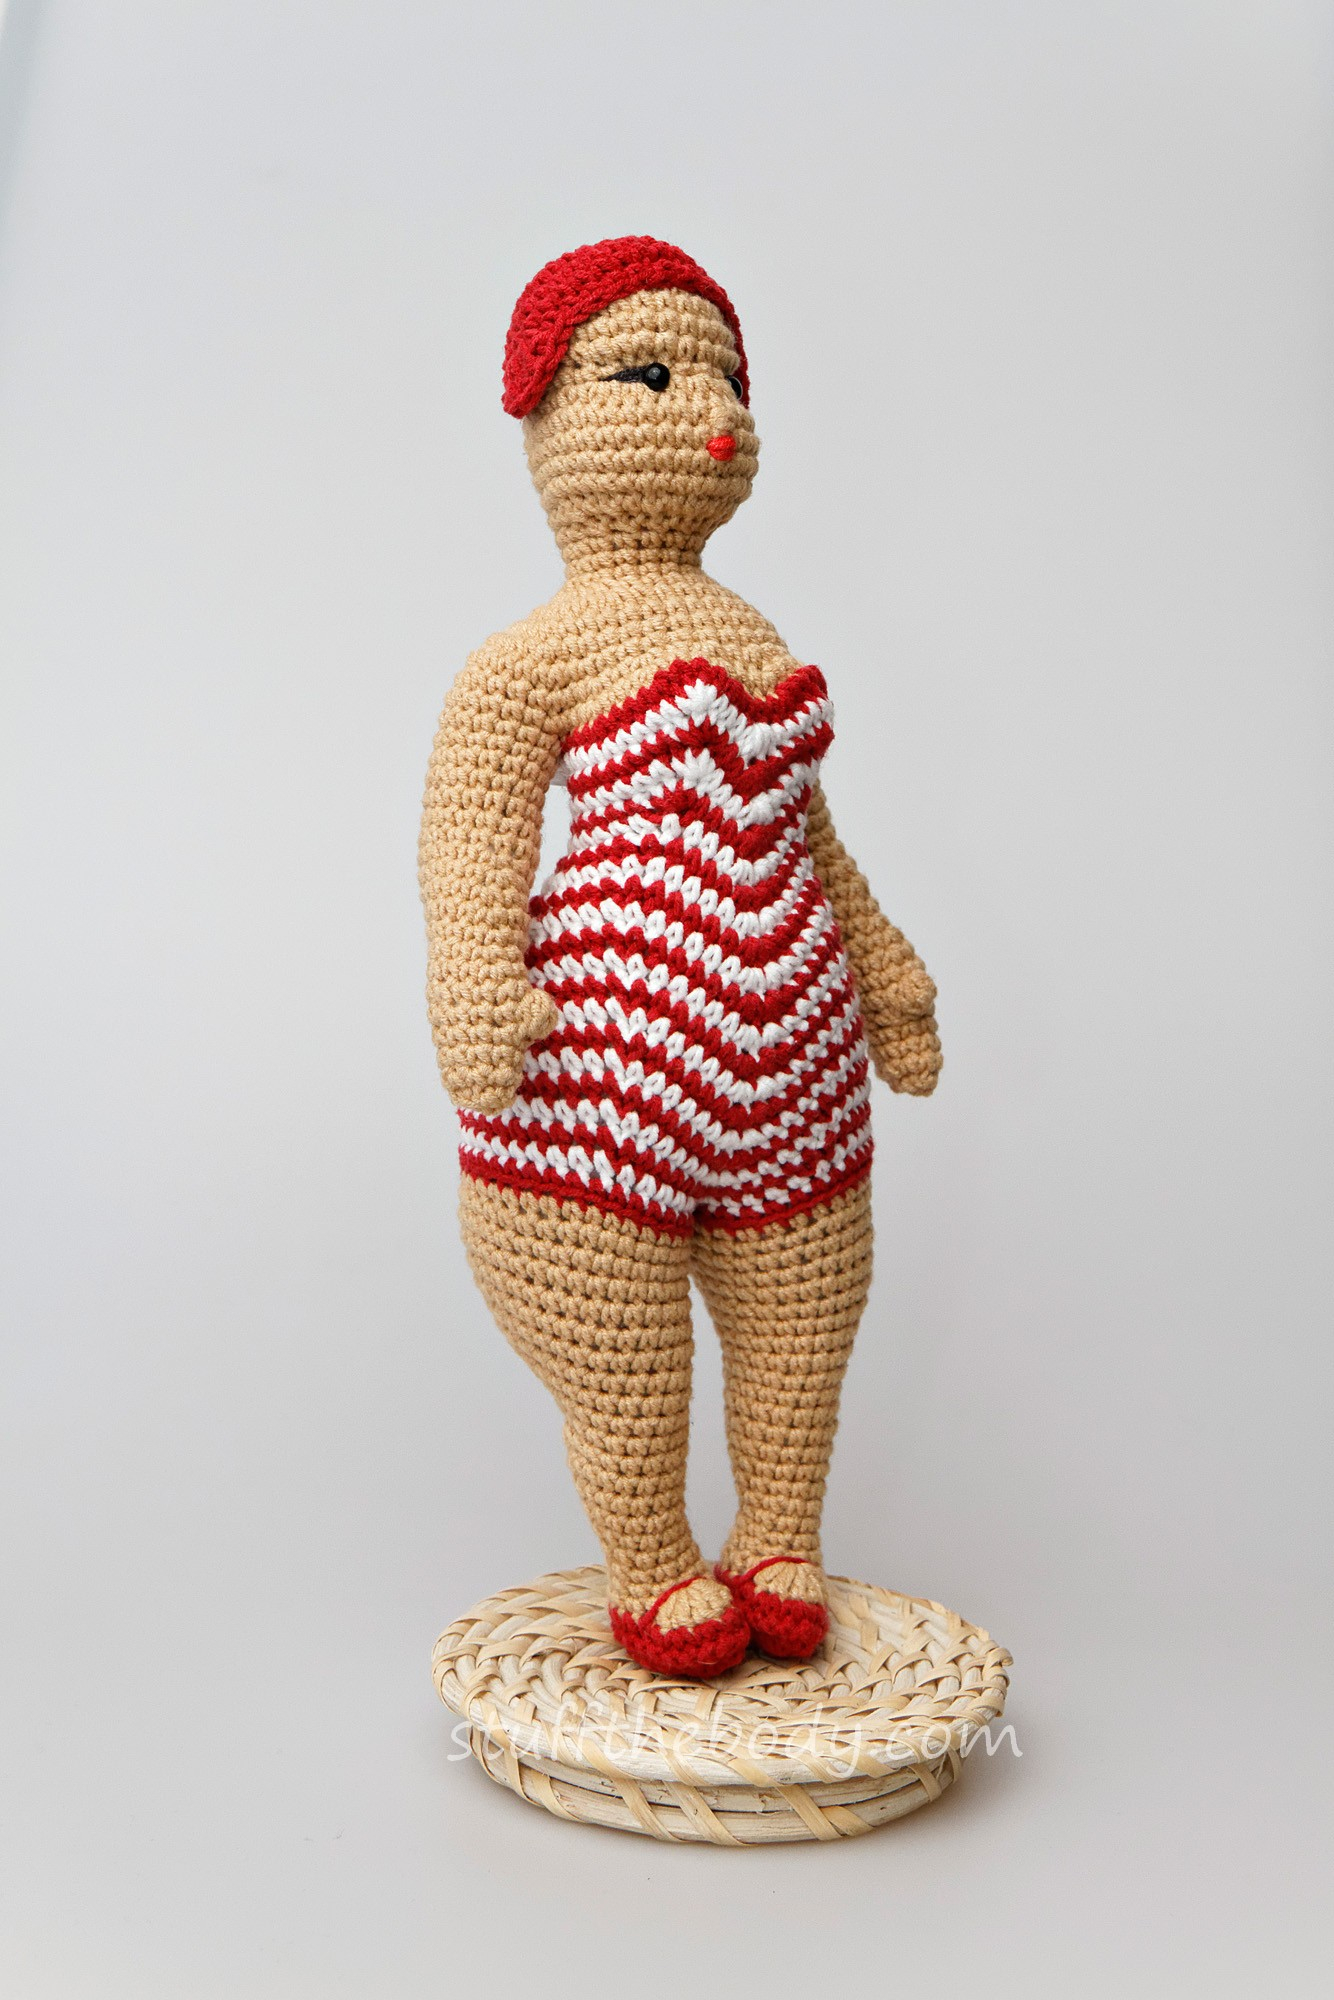 Simple Crochet Doll Pattern Stuff The Body Advanced Amigurumi Patterns